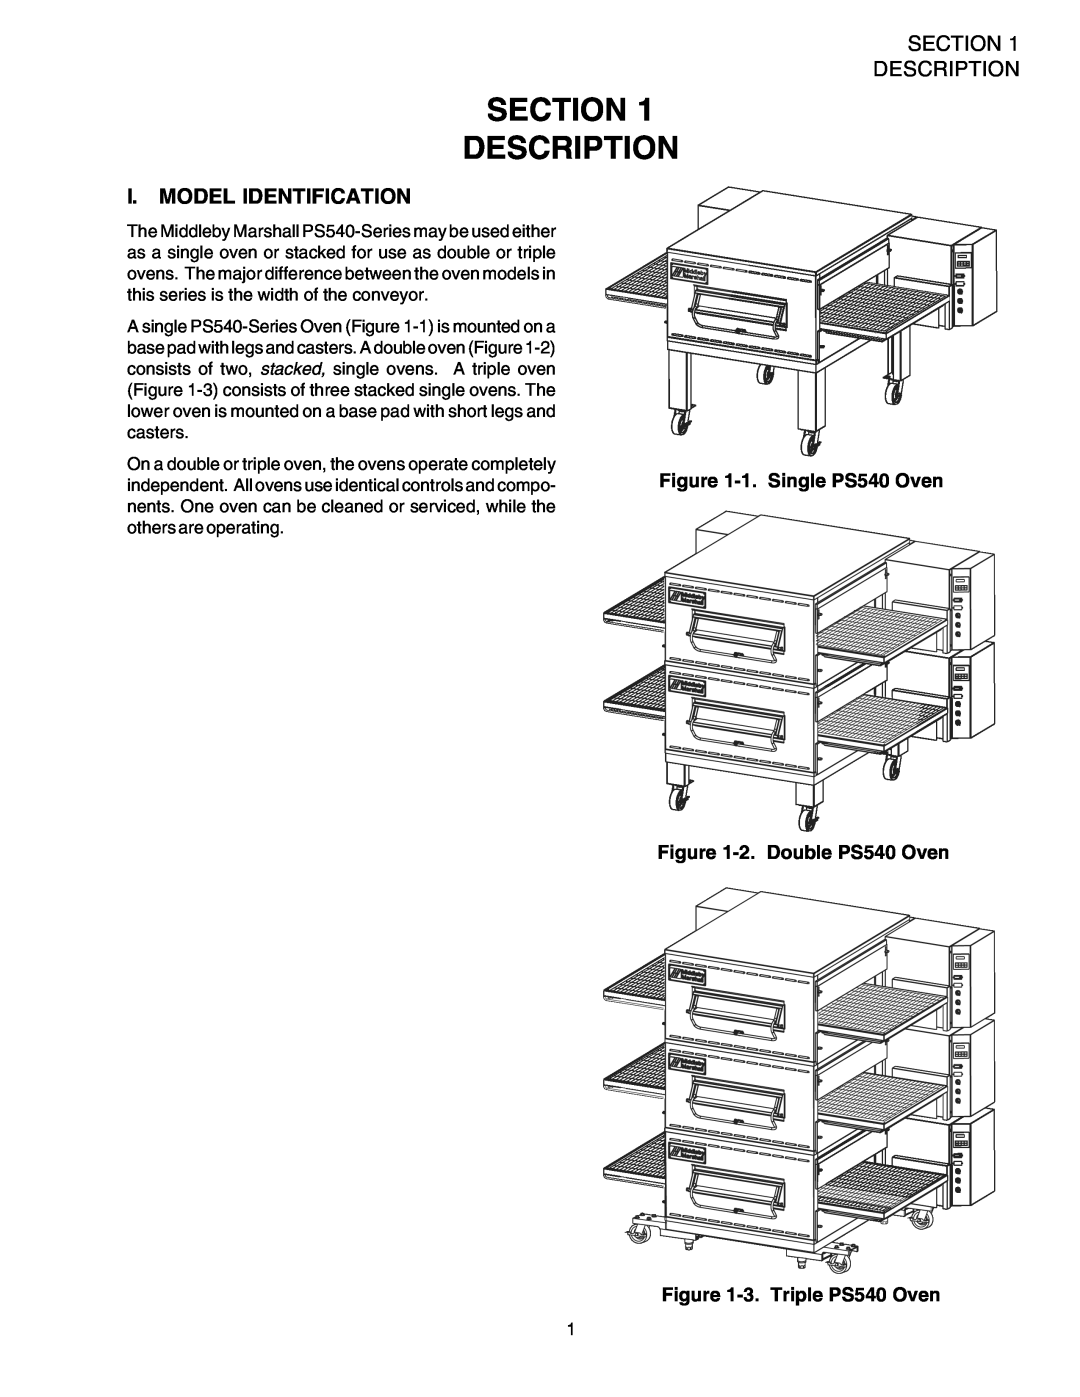 Middleby Marshall PS540 installation manual Section Description, I.Model Identification 